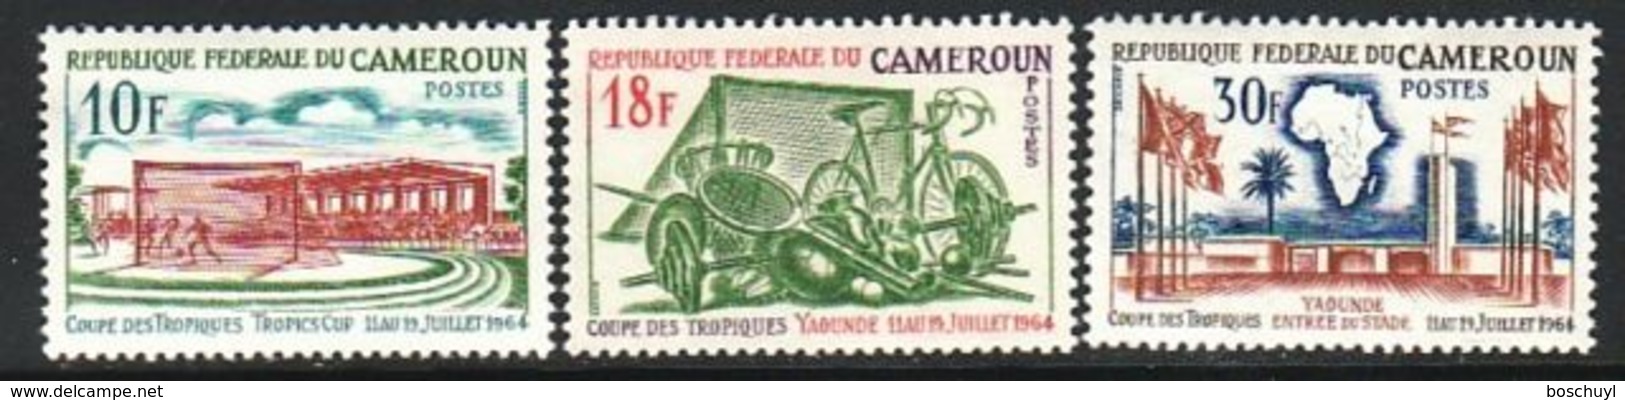 Cameroun, 1964, Sports, Tropics Cup, Soccer, Football, MNH, Michel 405-407 - Camerun (1960-...)